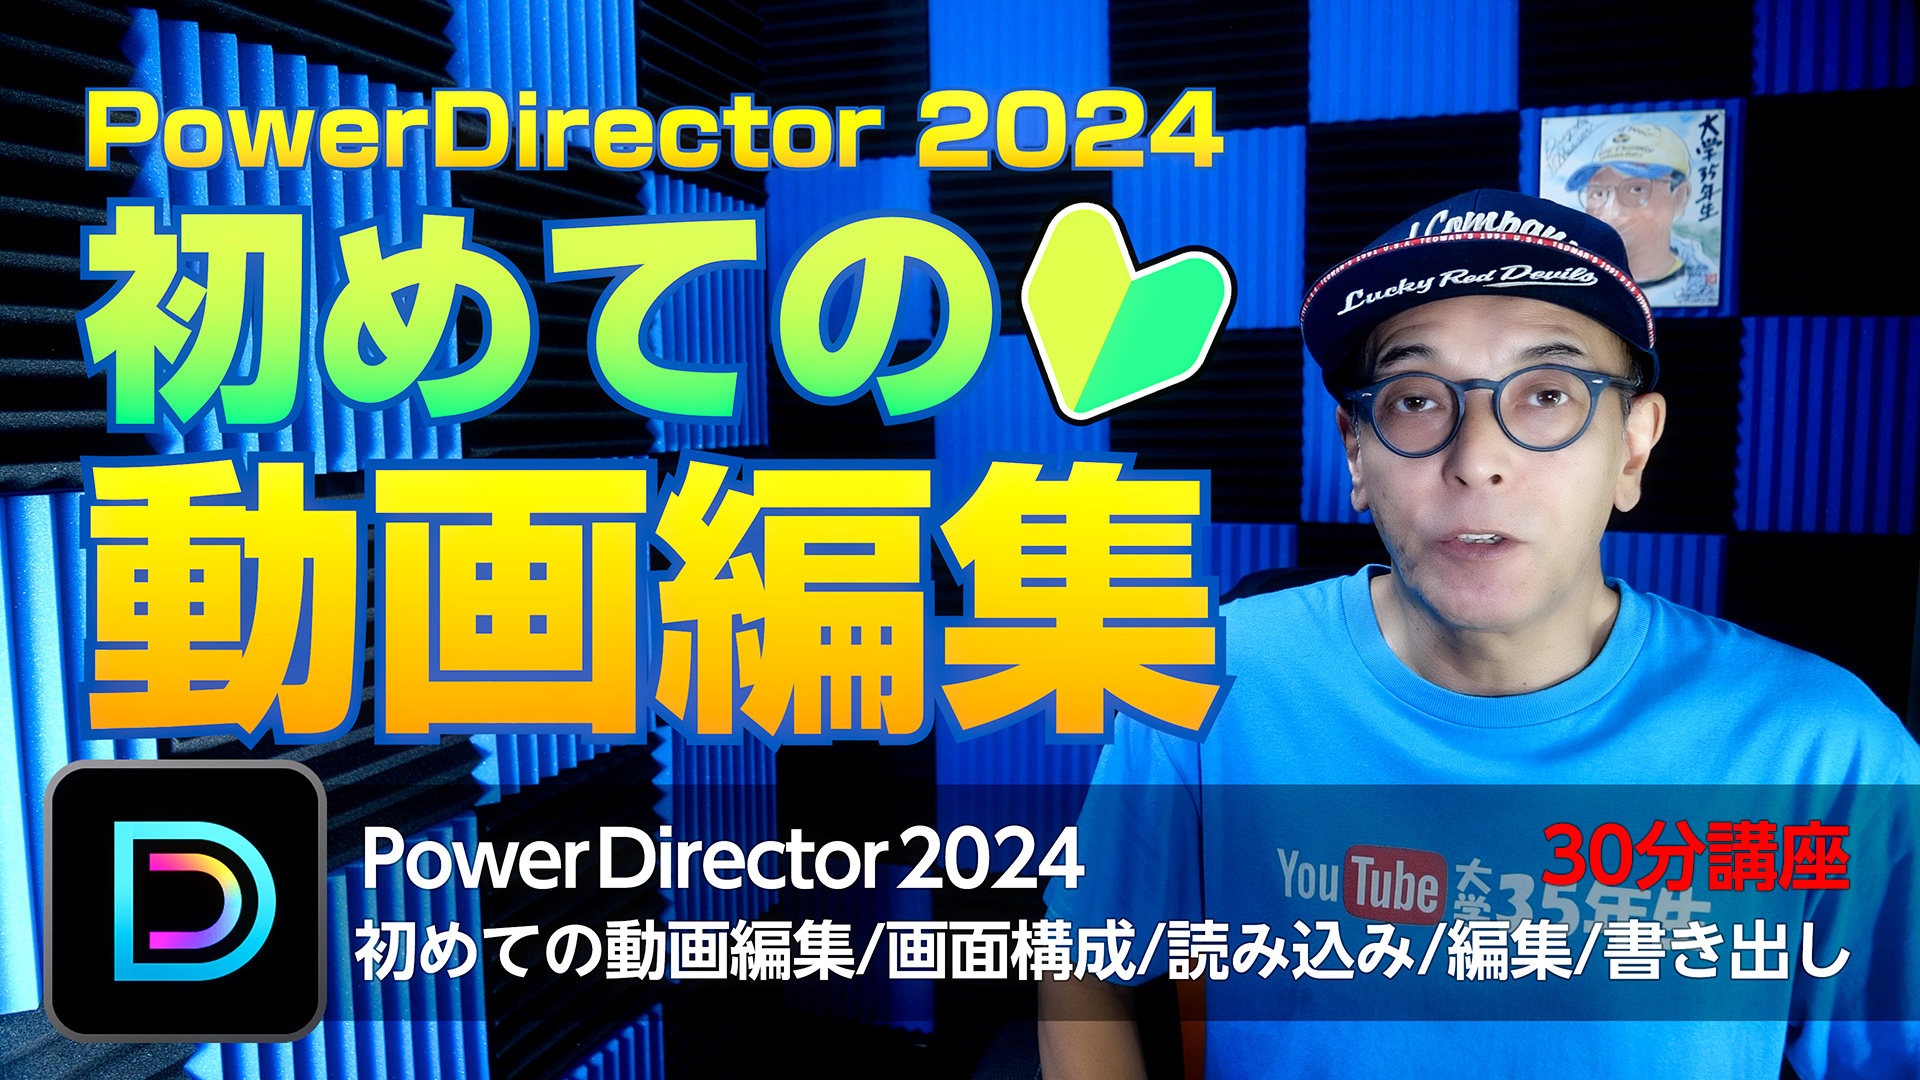 PowerDirector 2024 初めての動画編集 初心者向け30分講座/画面構成/読み込み/編集/書き出し